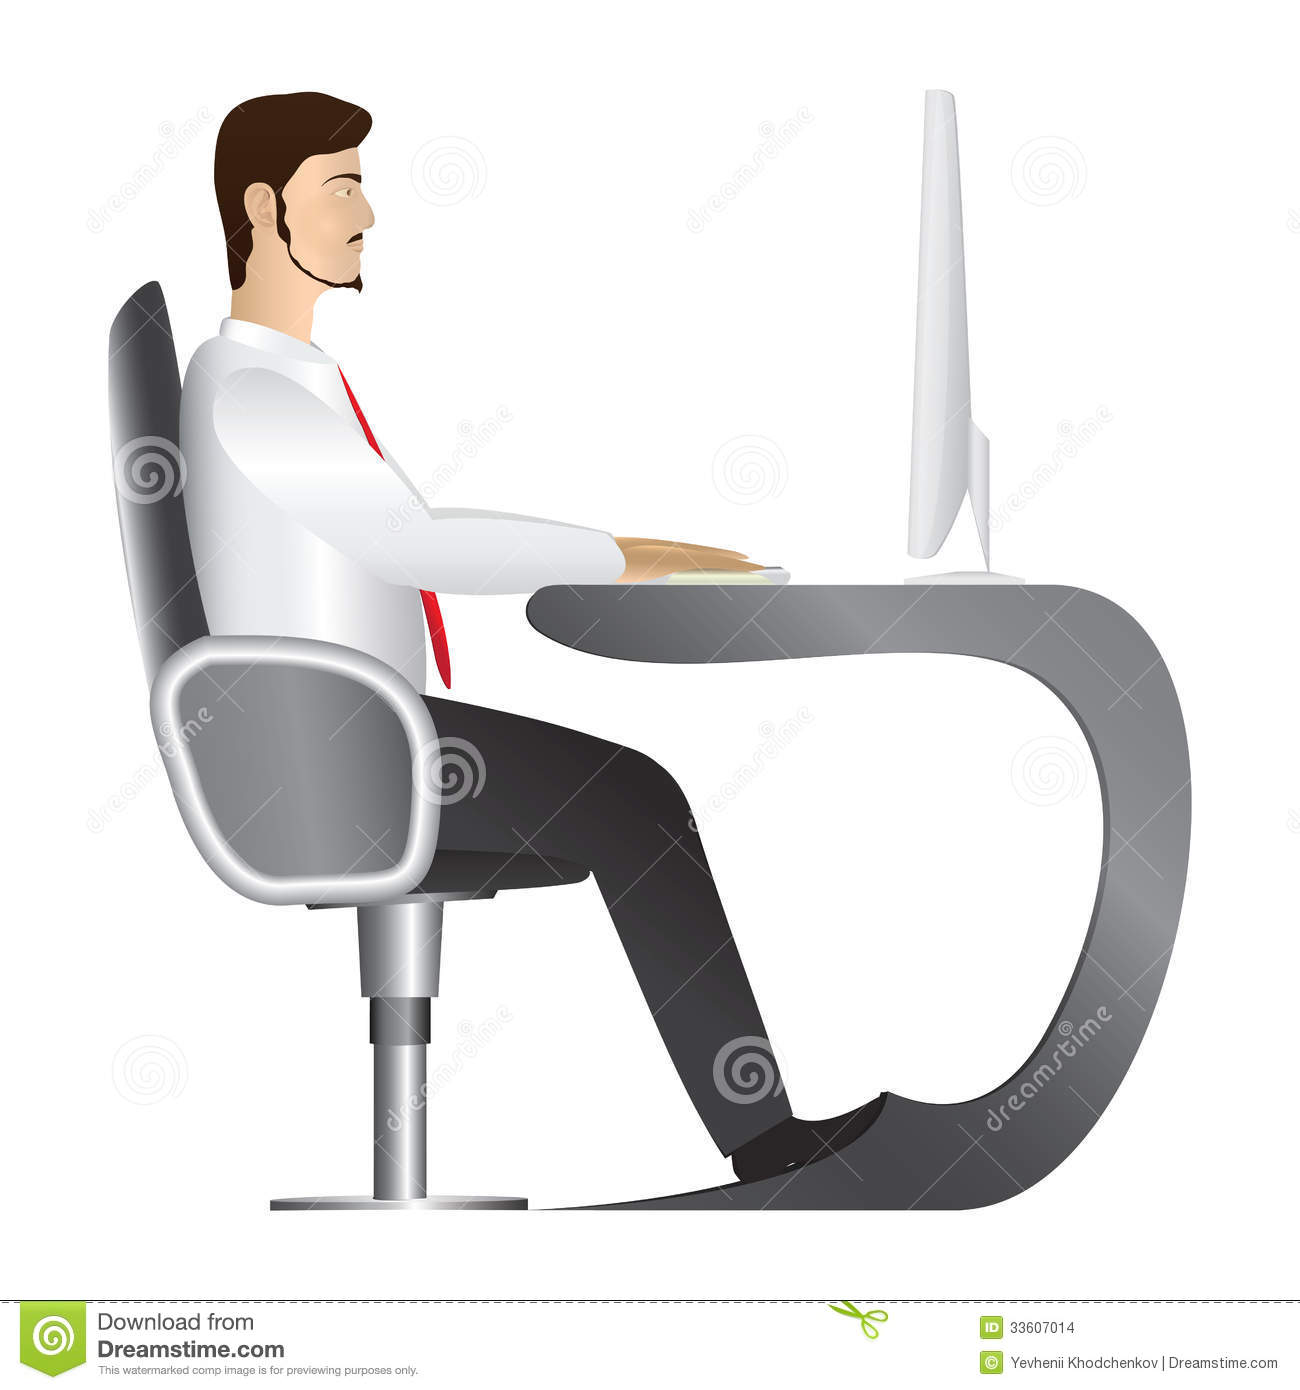 Man Working at Computer